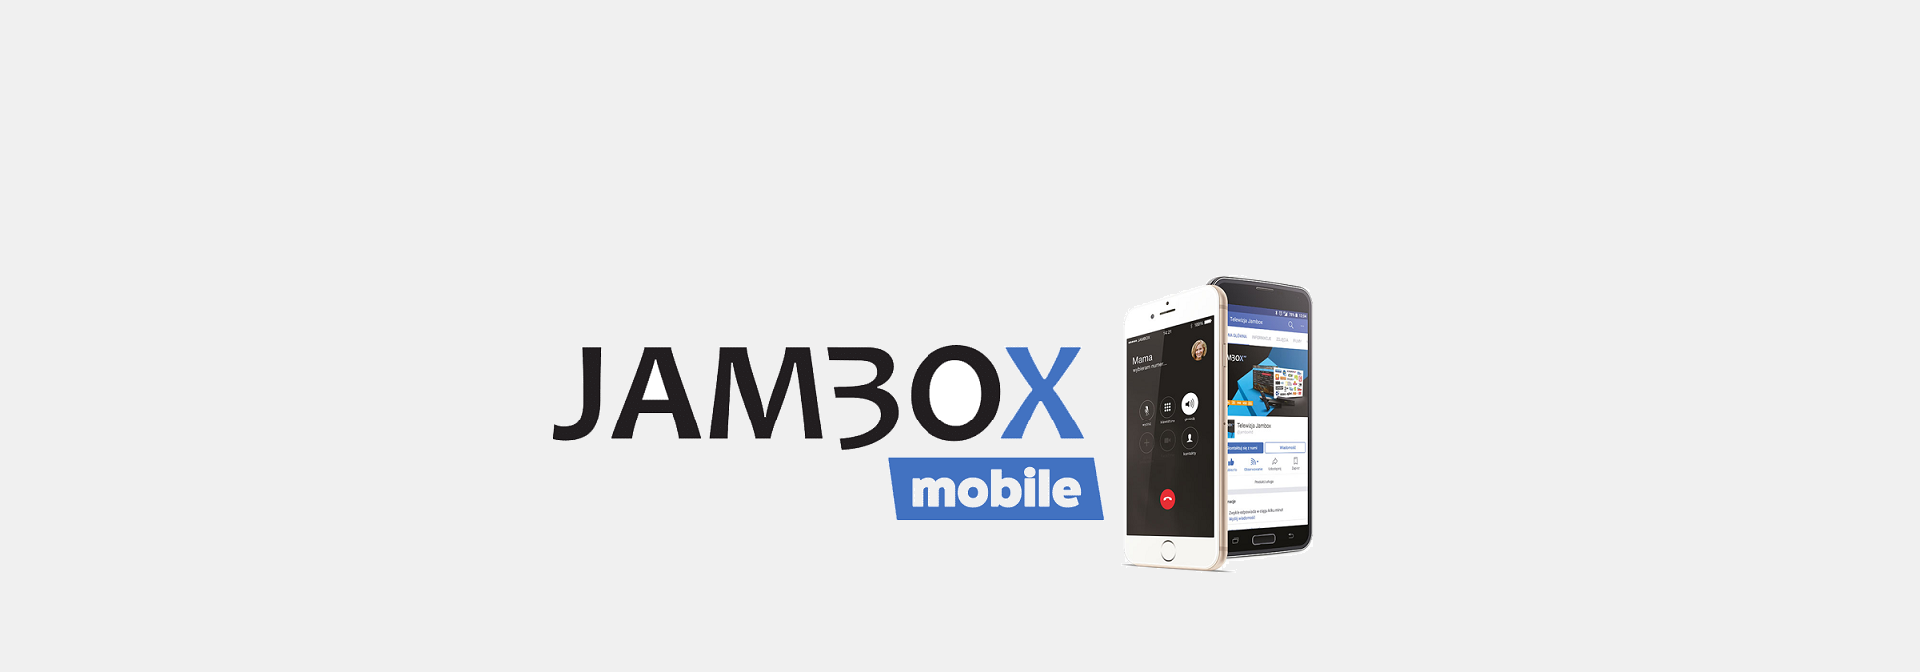 Jambox mobile